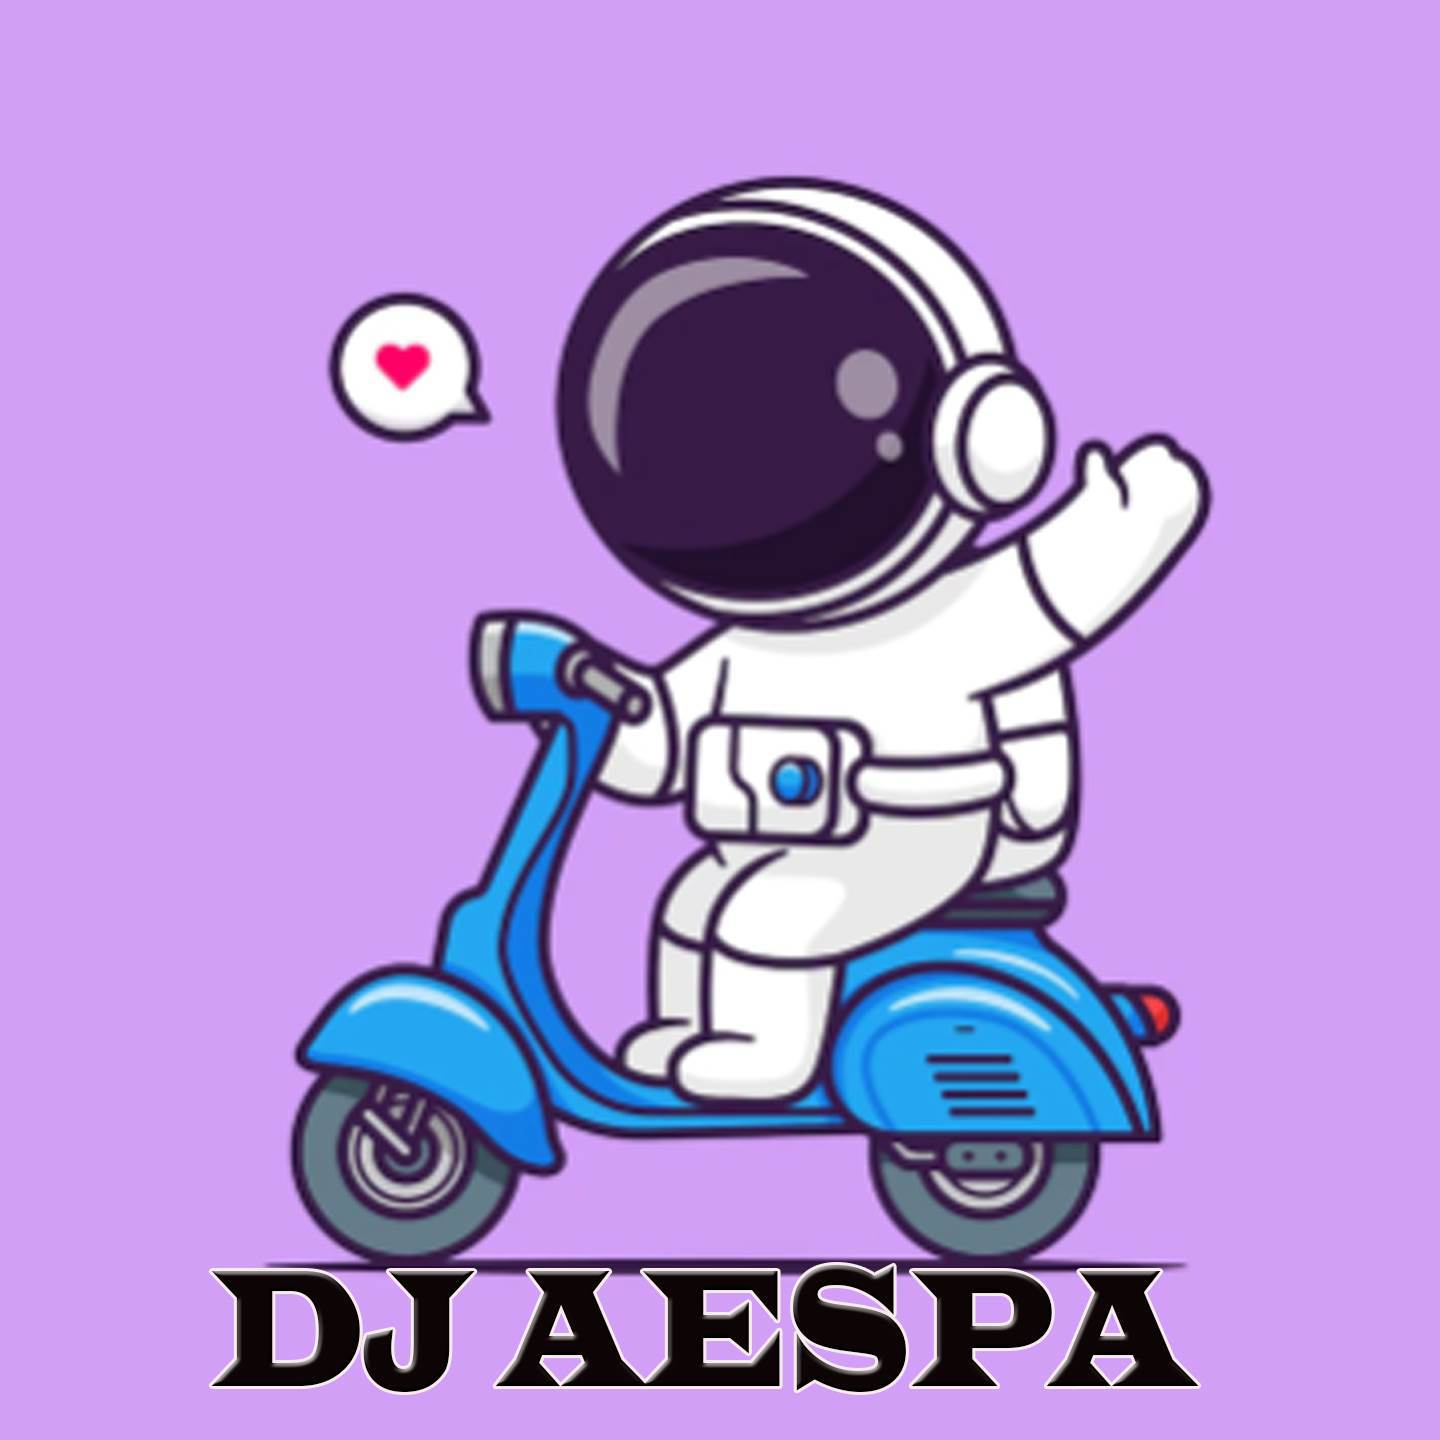 DJ AESPA - Alex Ferrari - Te Pego E Pa Pararara Remix Full Bass 2022 New